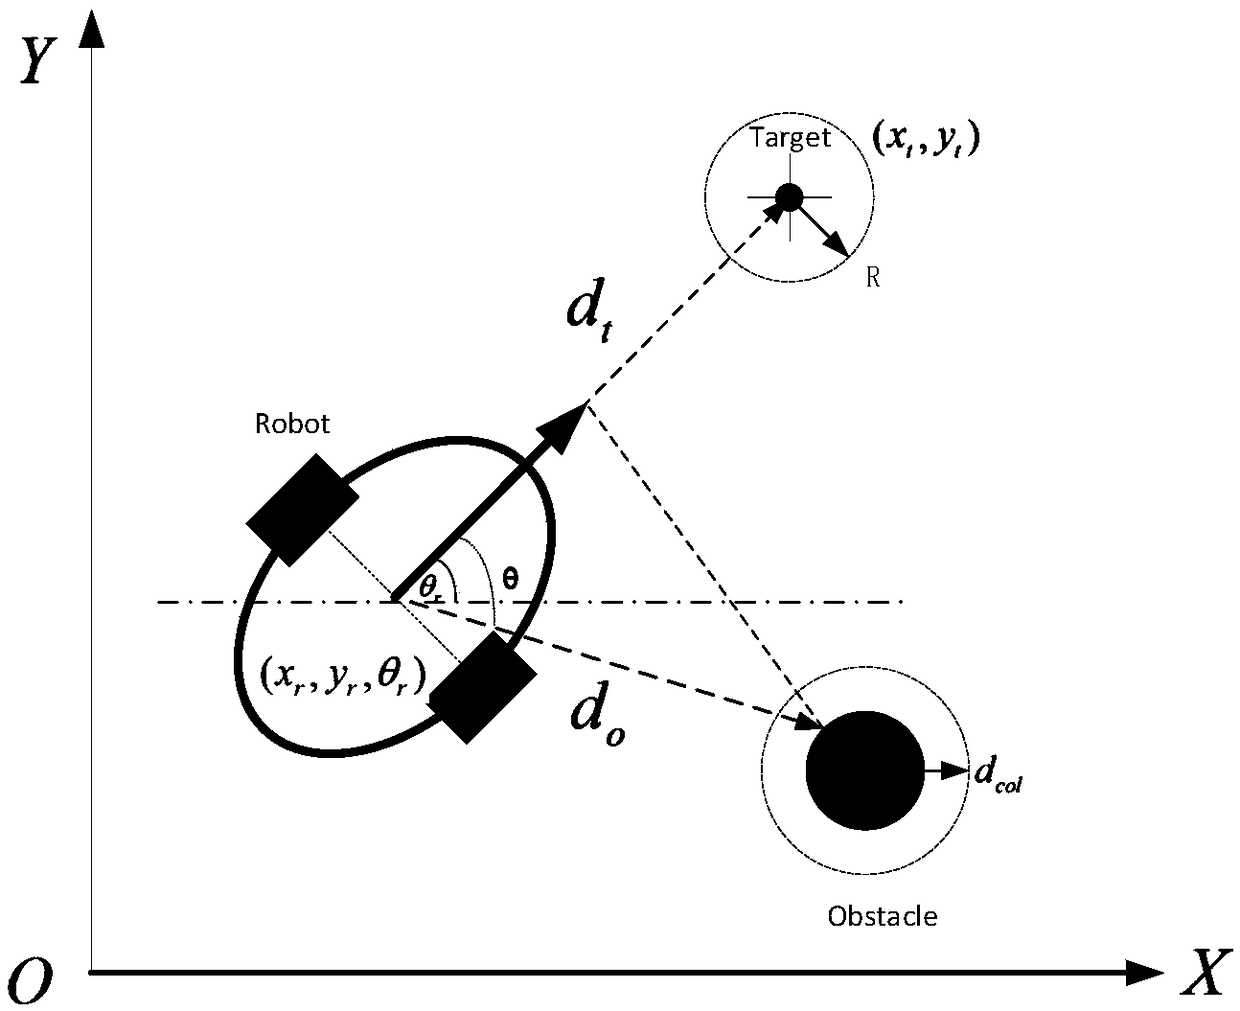 Sensor fusion and improved Q learning algorithm based dynamic barrier avoidance method